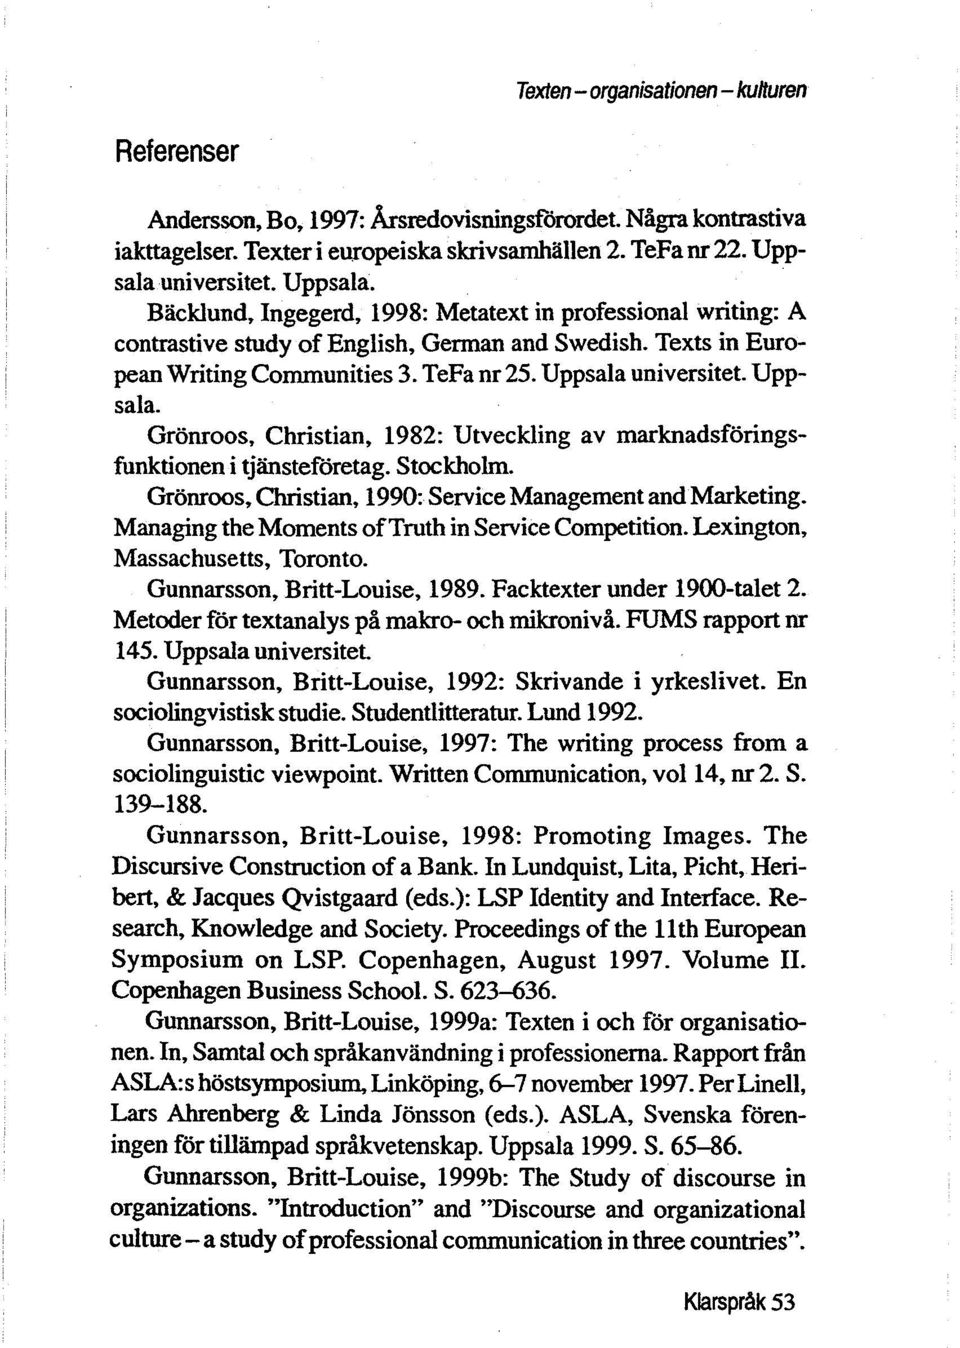 Uppsala. Gronroos, Christian, 1982: Utveckling av marknadsforingsfunktionen i tjansteforetag. Stockholm. Gronroos, Christian, 1990: Service Management and Marketing.